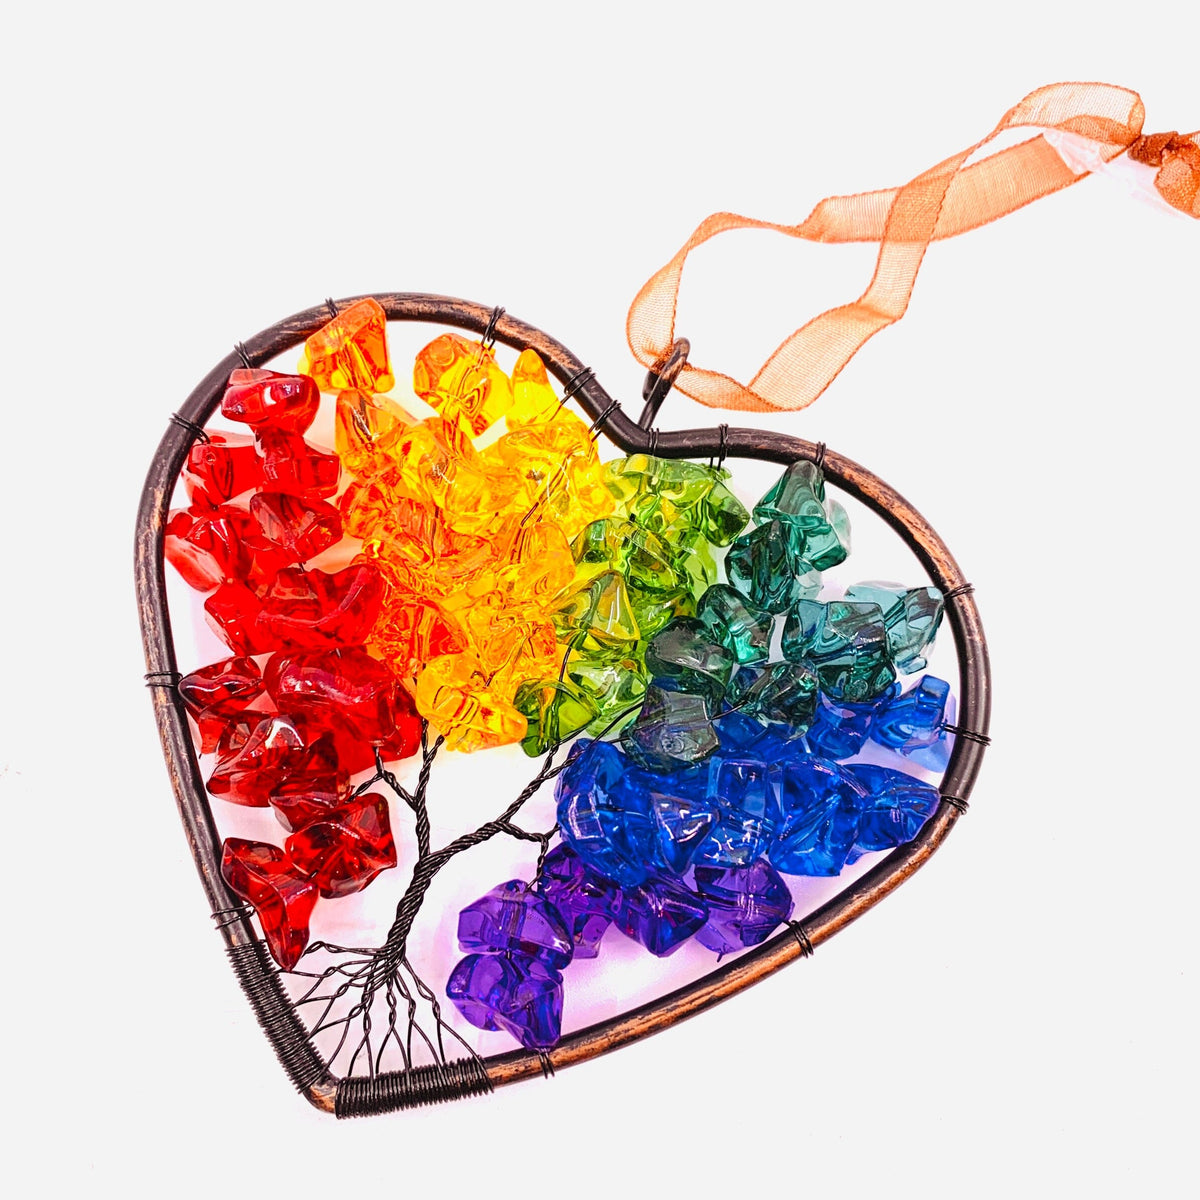 Rainbow Crystal Heart Ornament Ornament GANZ 